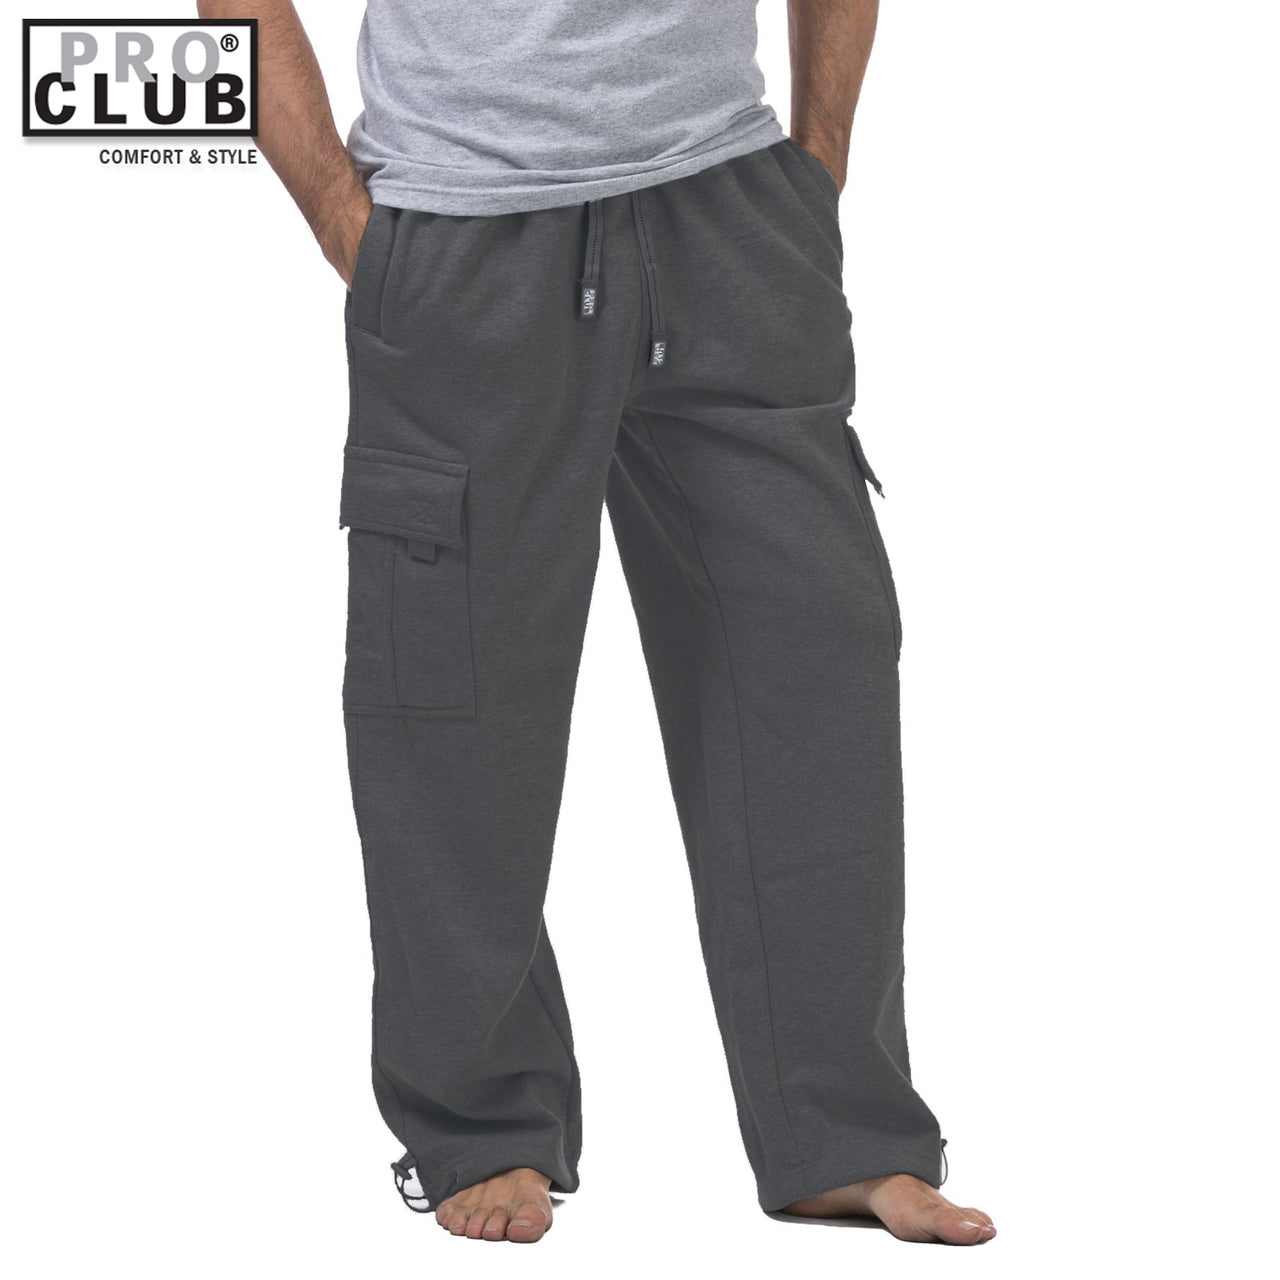 Pro Club Men's Heavyweight Fleece Cargo Sweatpants Charcoal(Dark Gray)